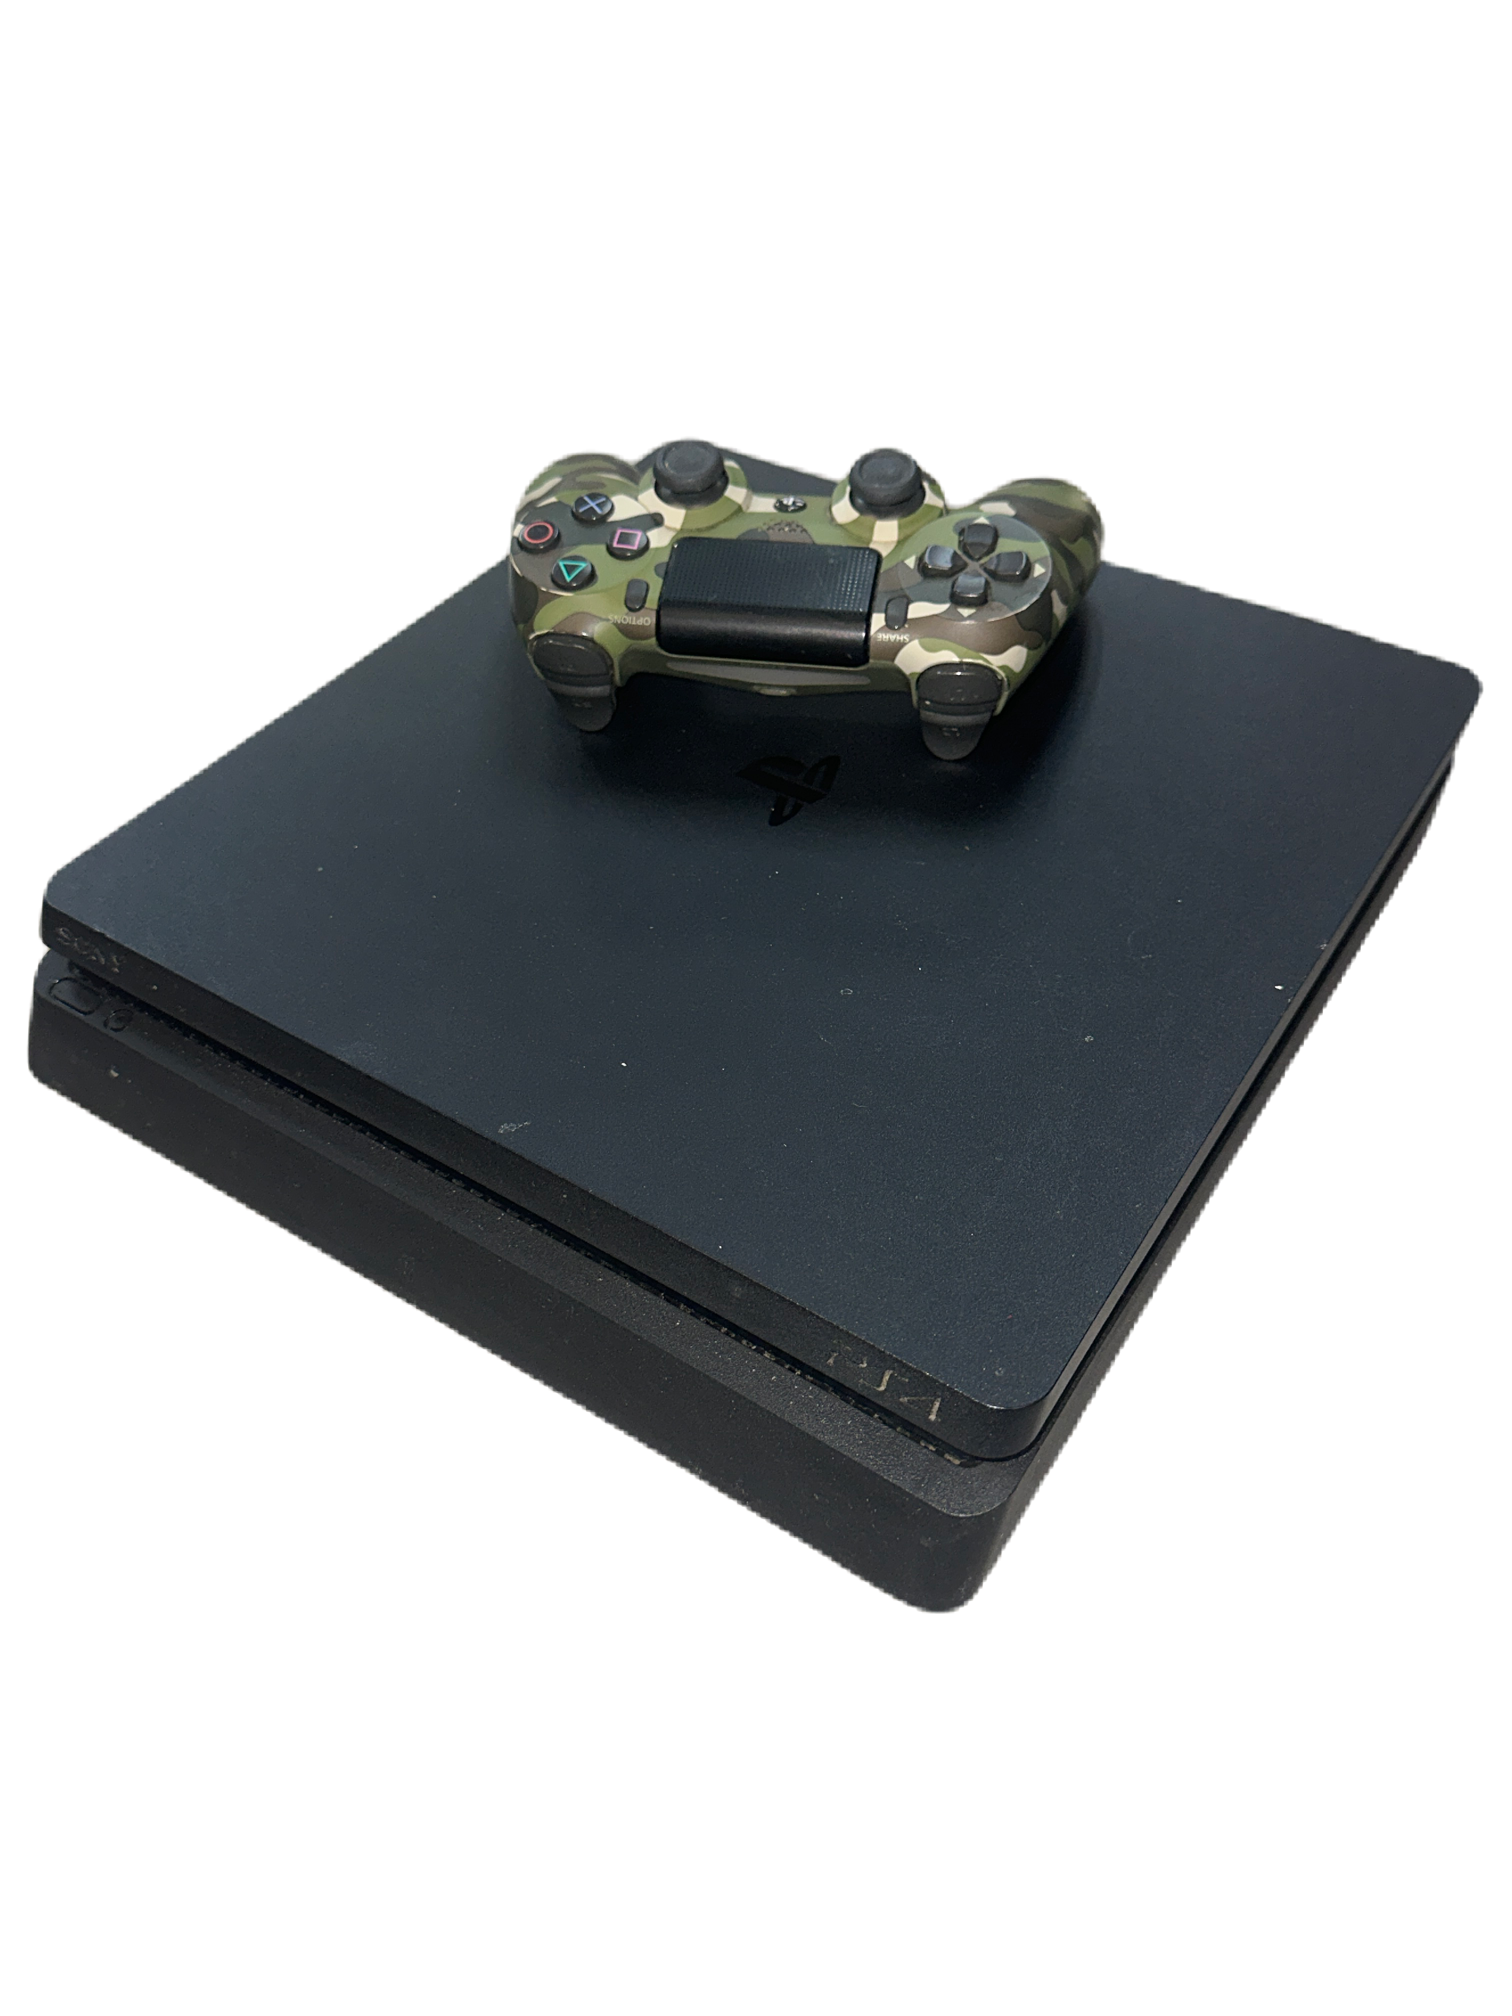 PlayStation 4 Slim 500GB W 1 Controller Missing Back Panel